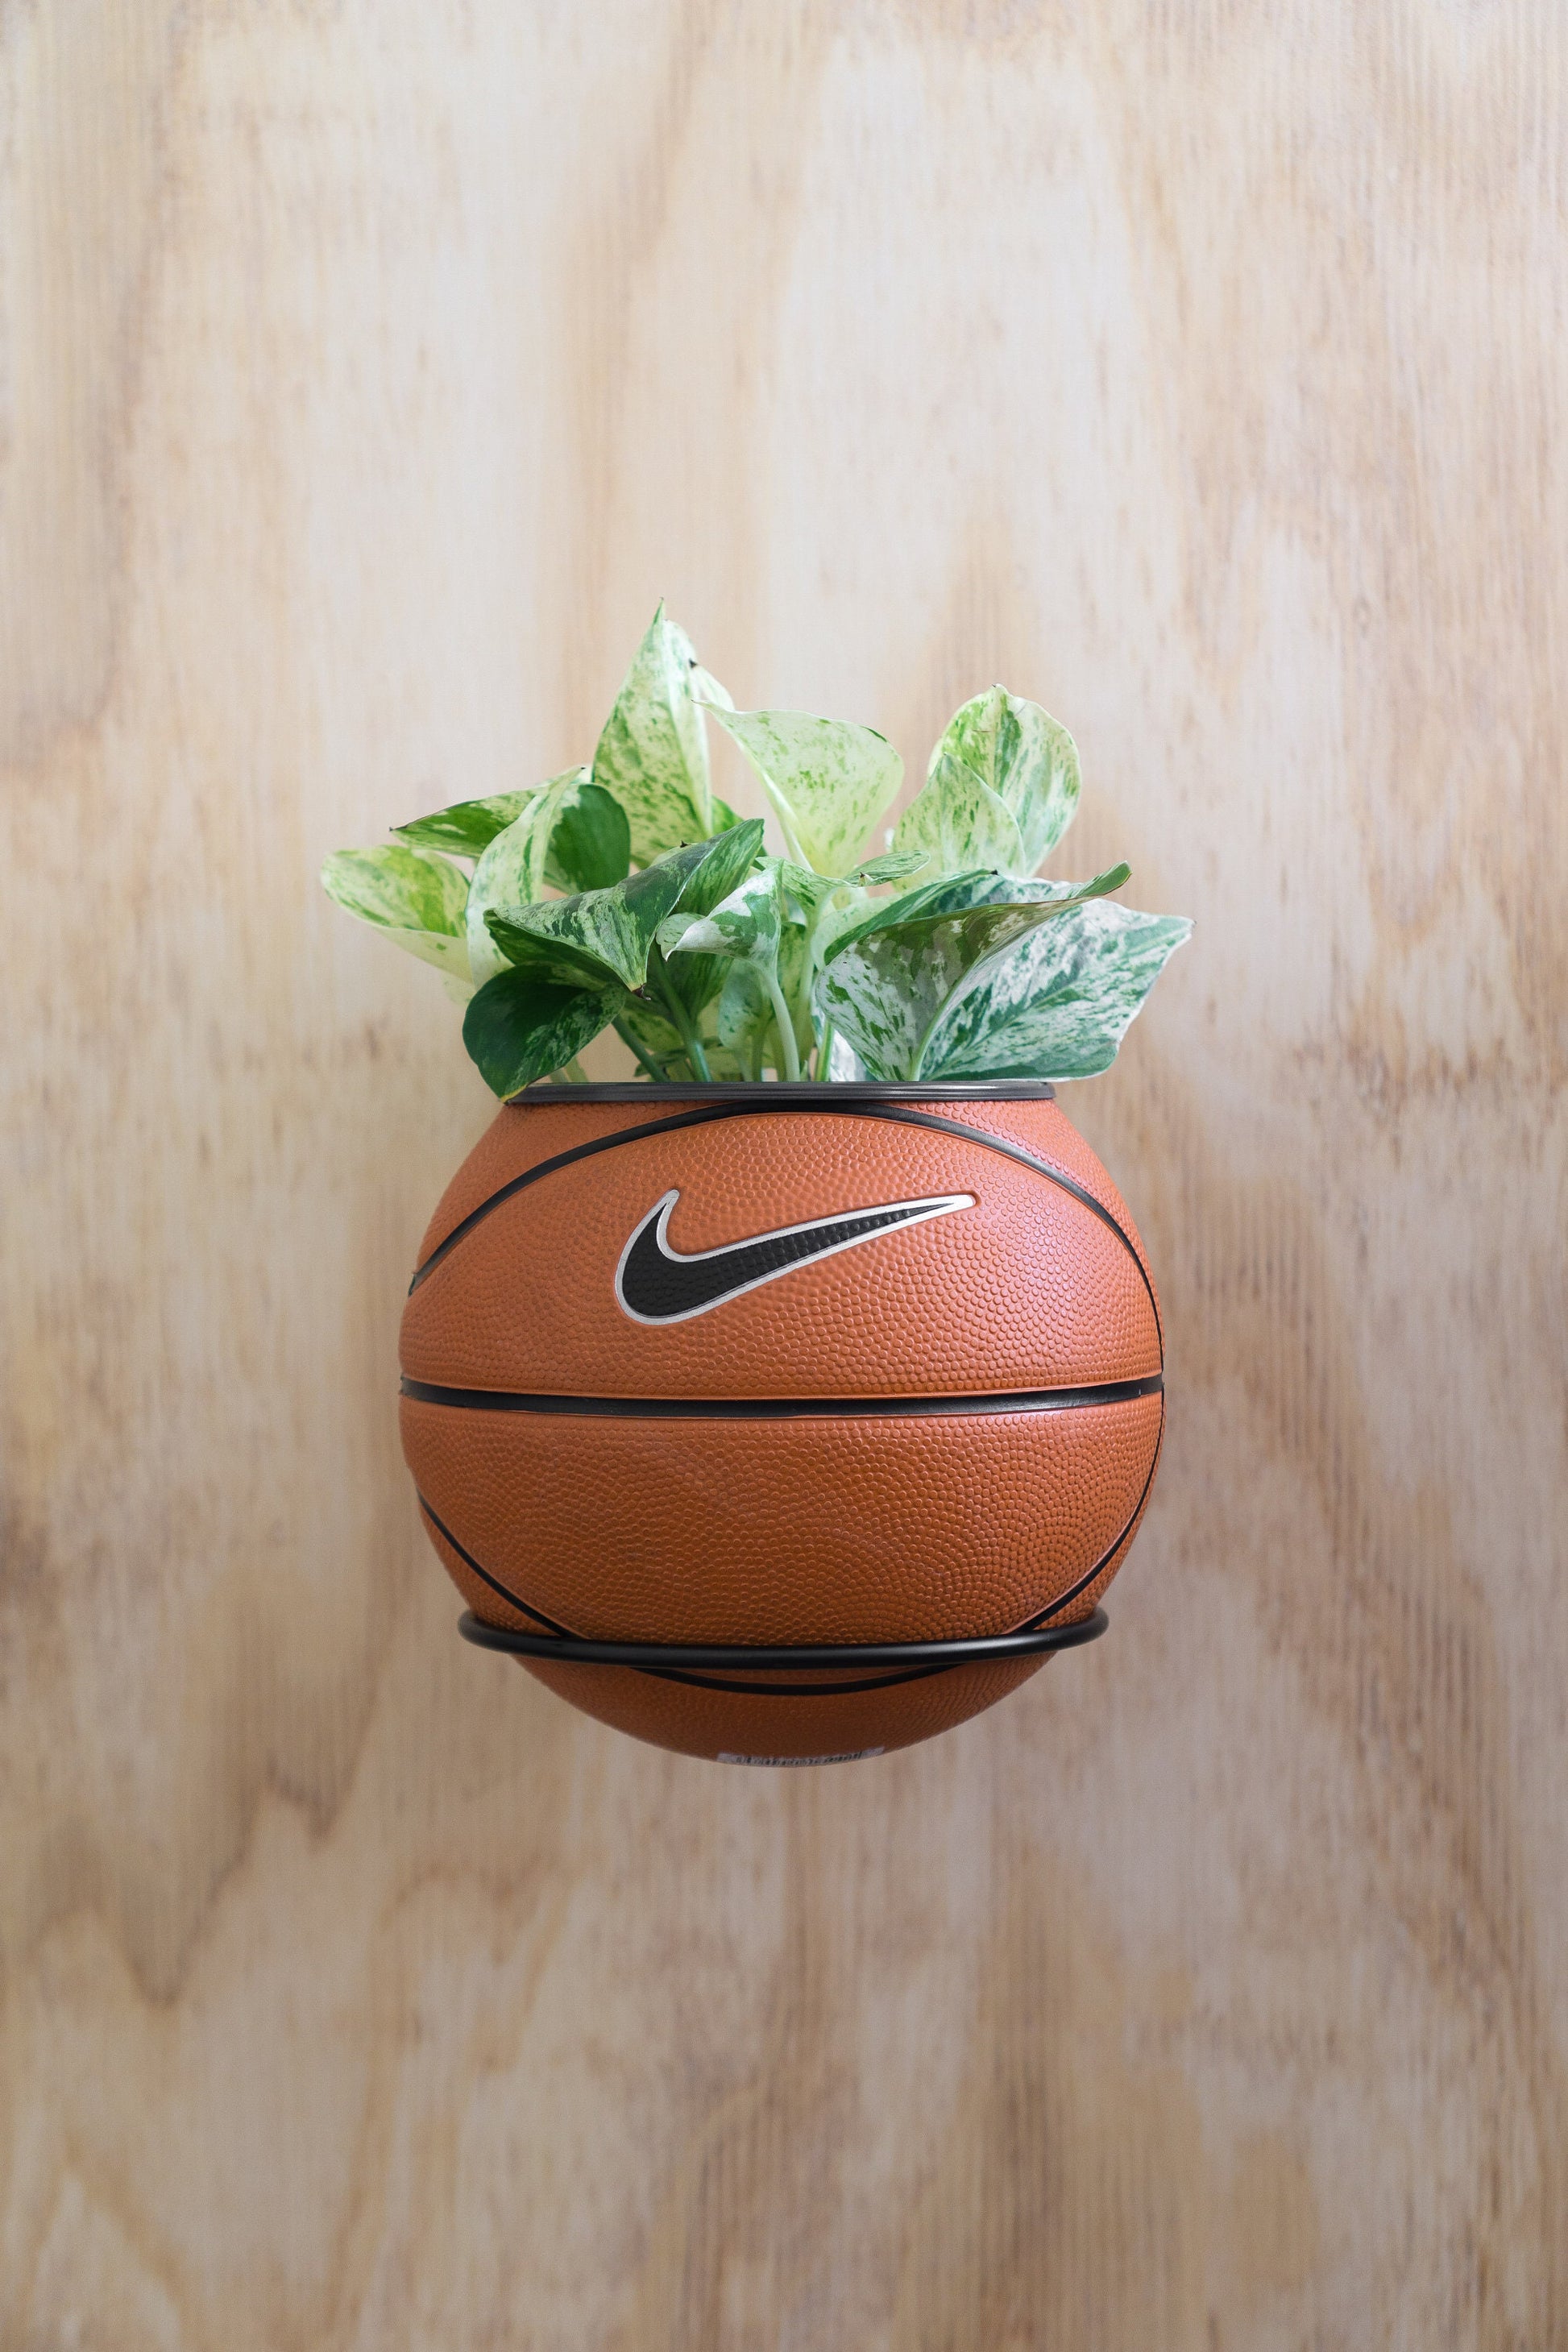 plntrs - Nike Swoosh Skills Revival Sportswear Mini Basketball Planter - new ball with stand